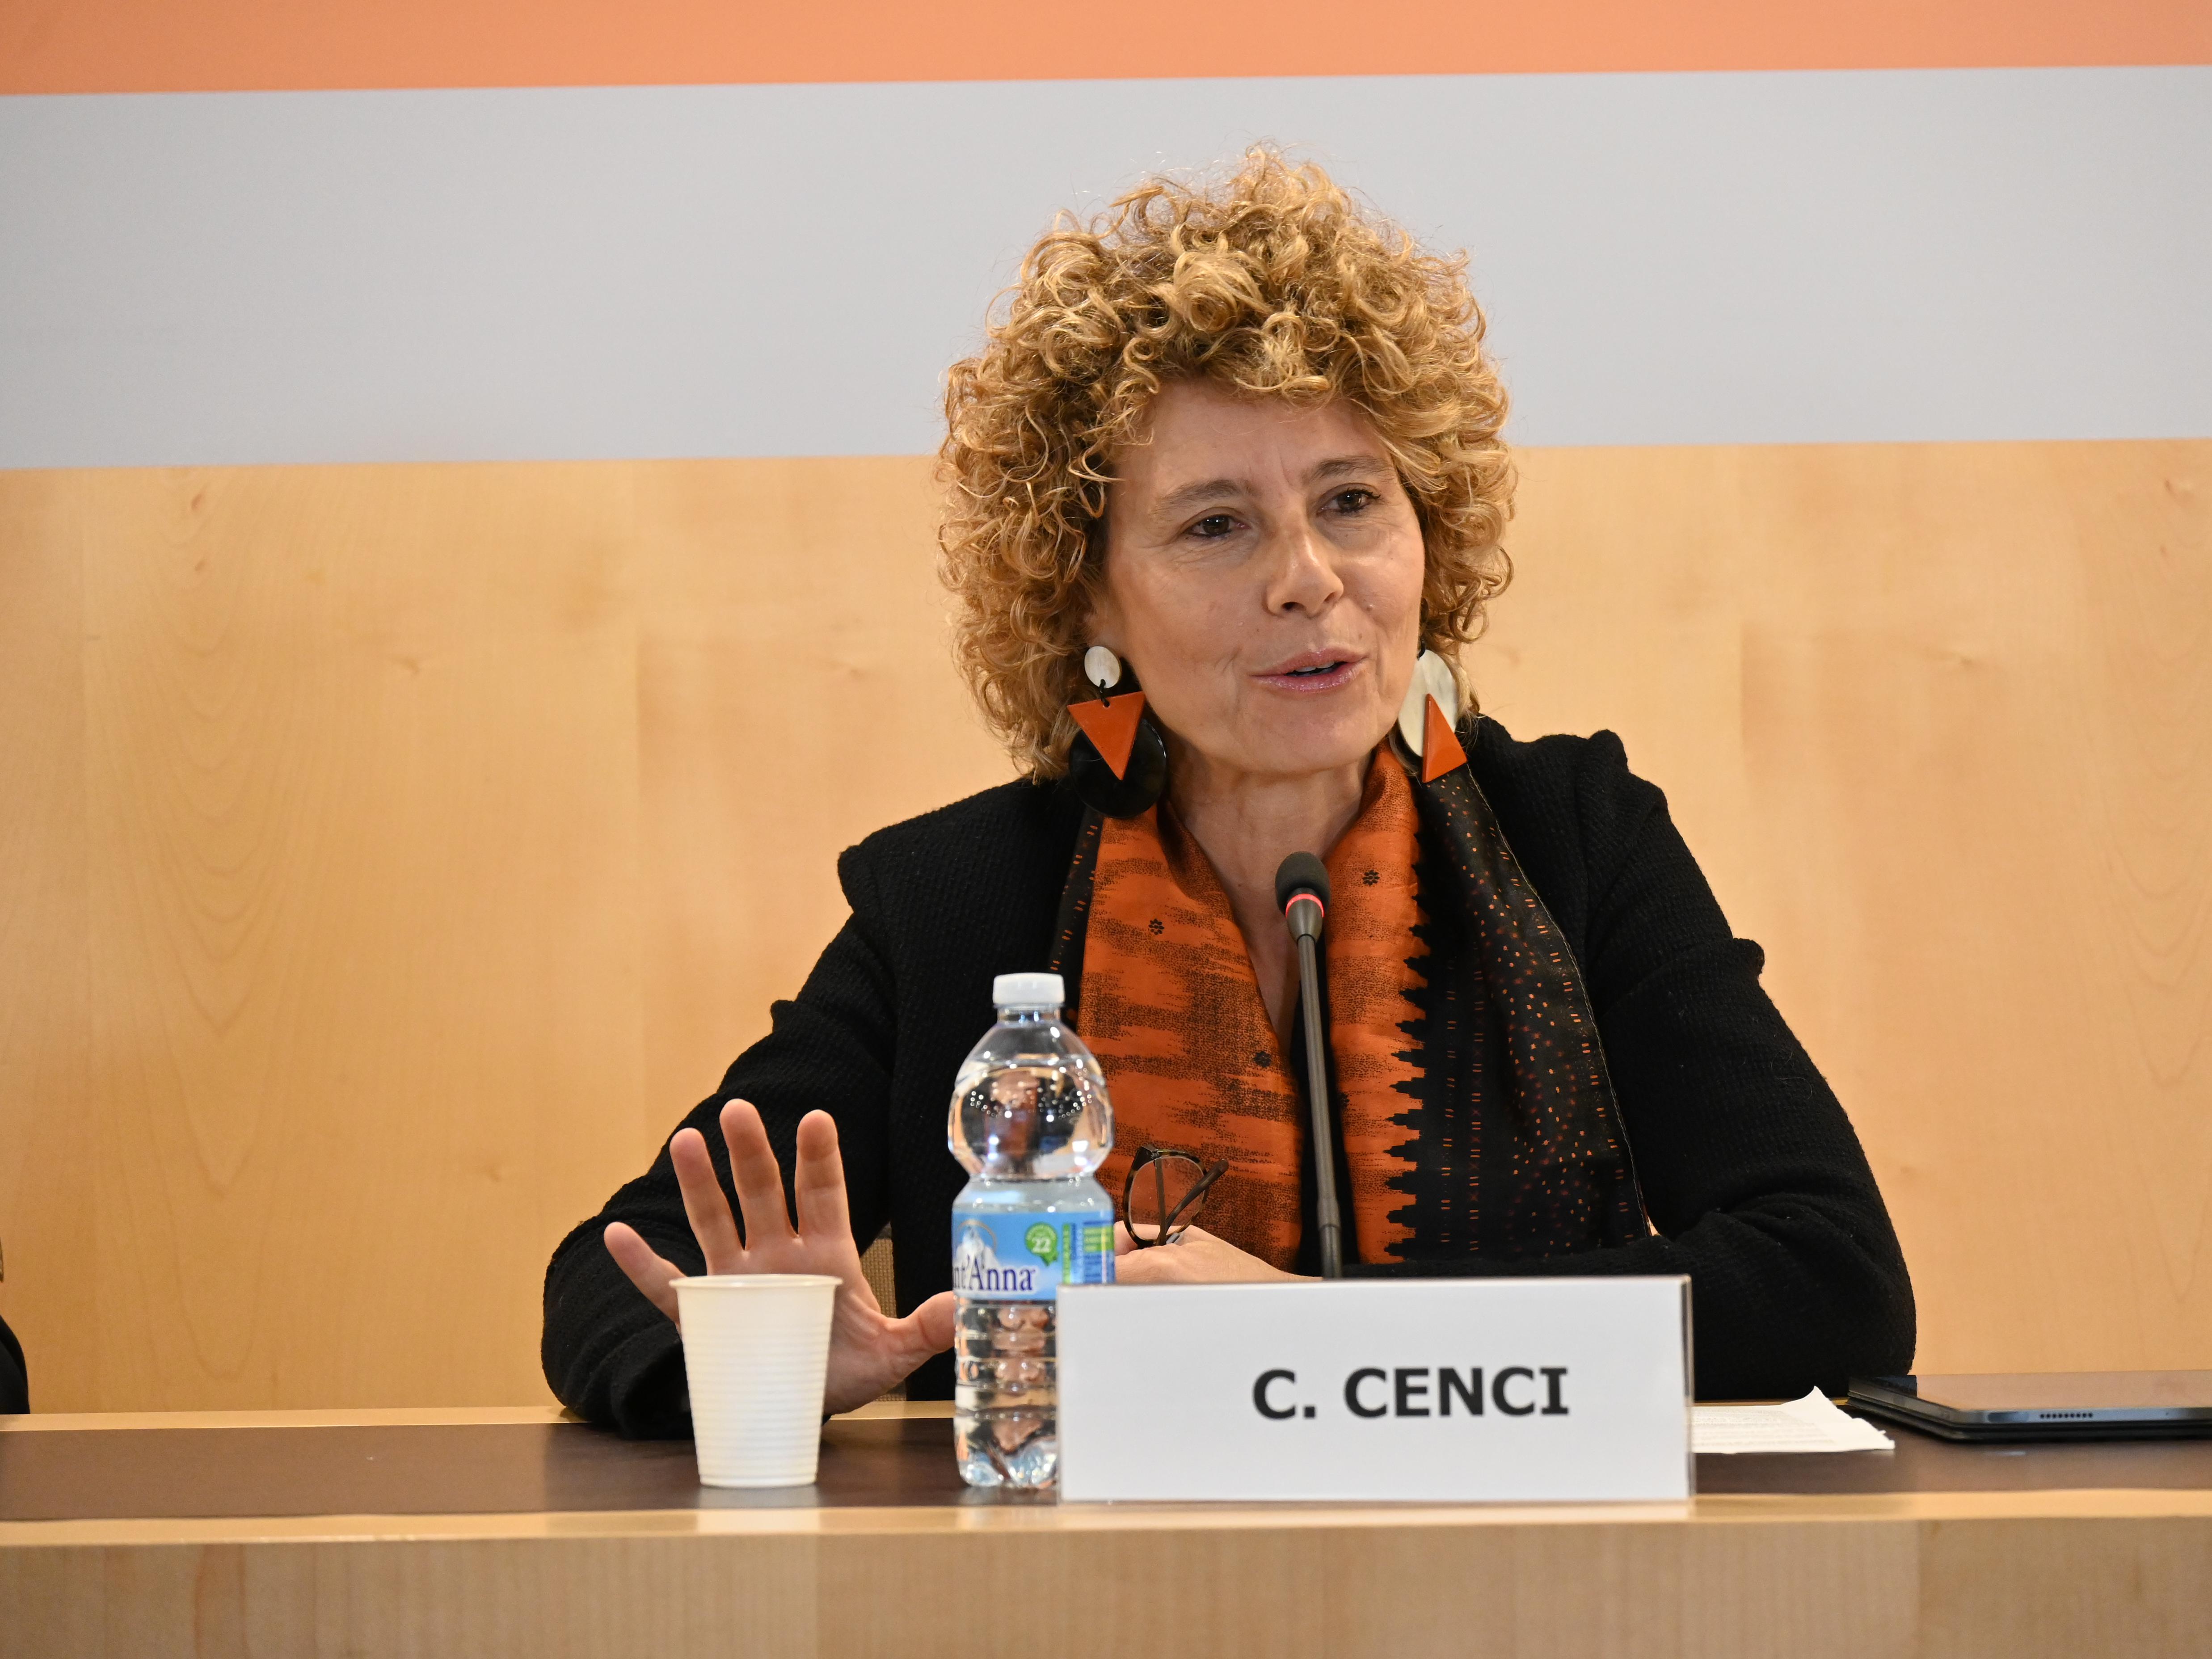 Cristina Cenci, partner Eikon Sc